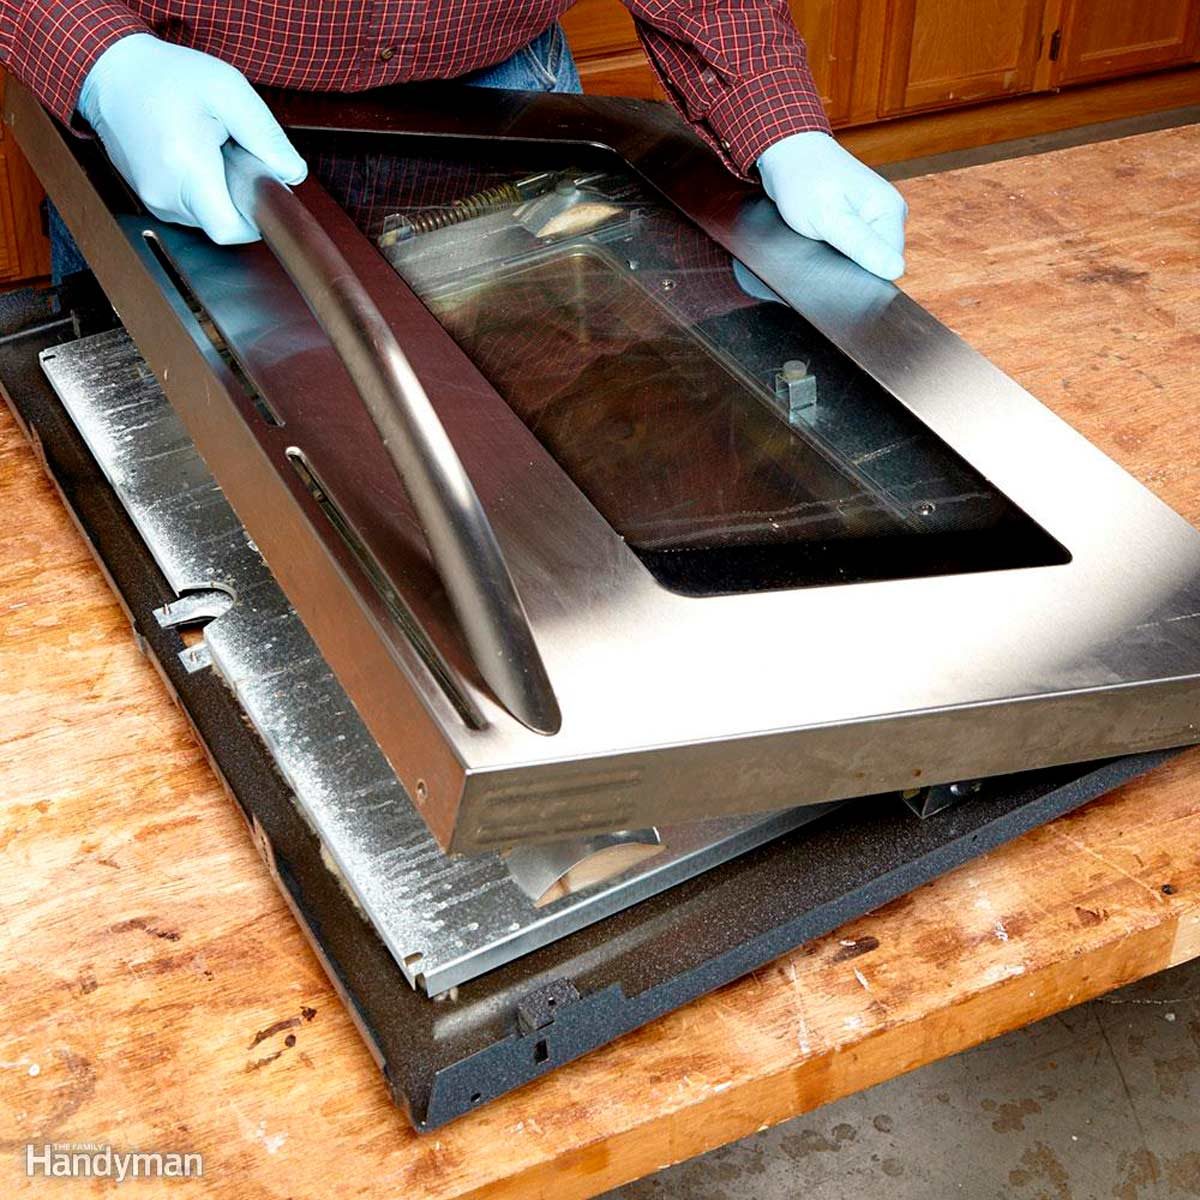 How to Clean a Glass Oven Door